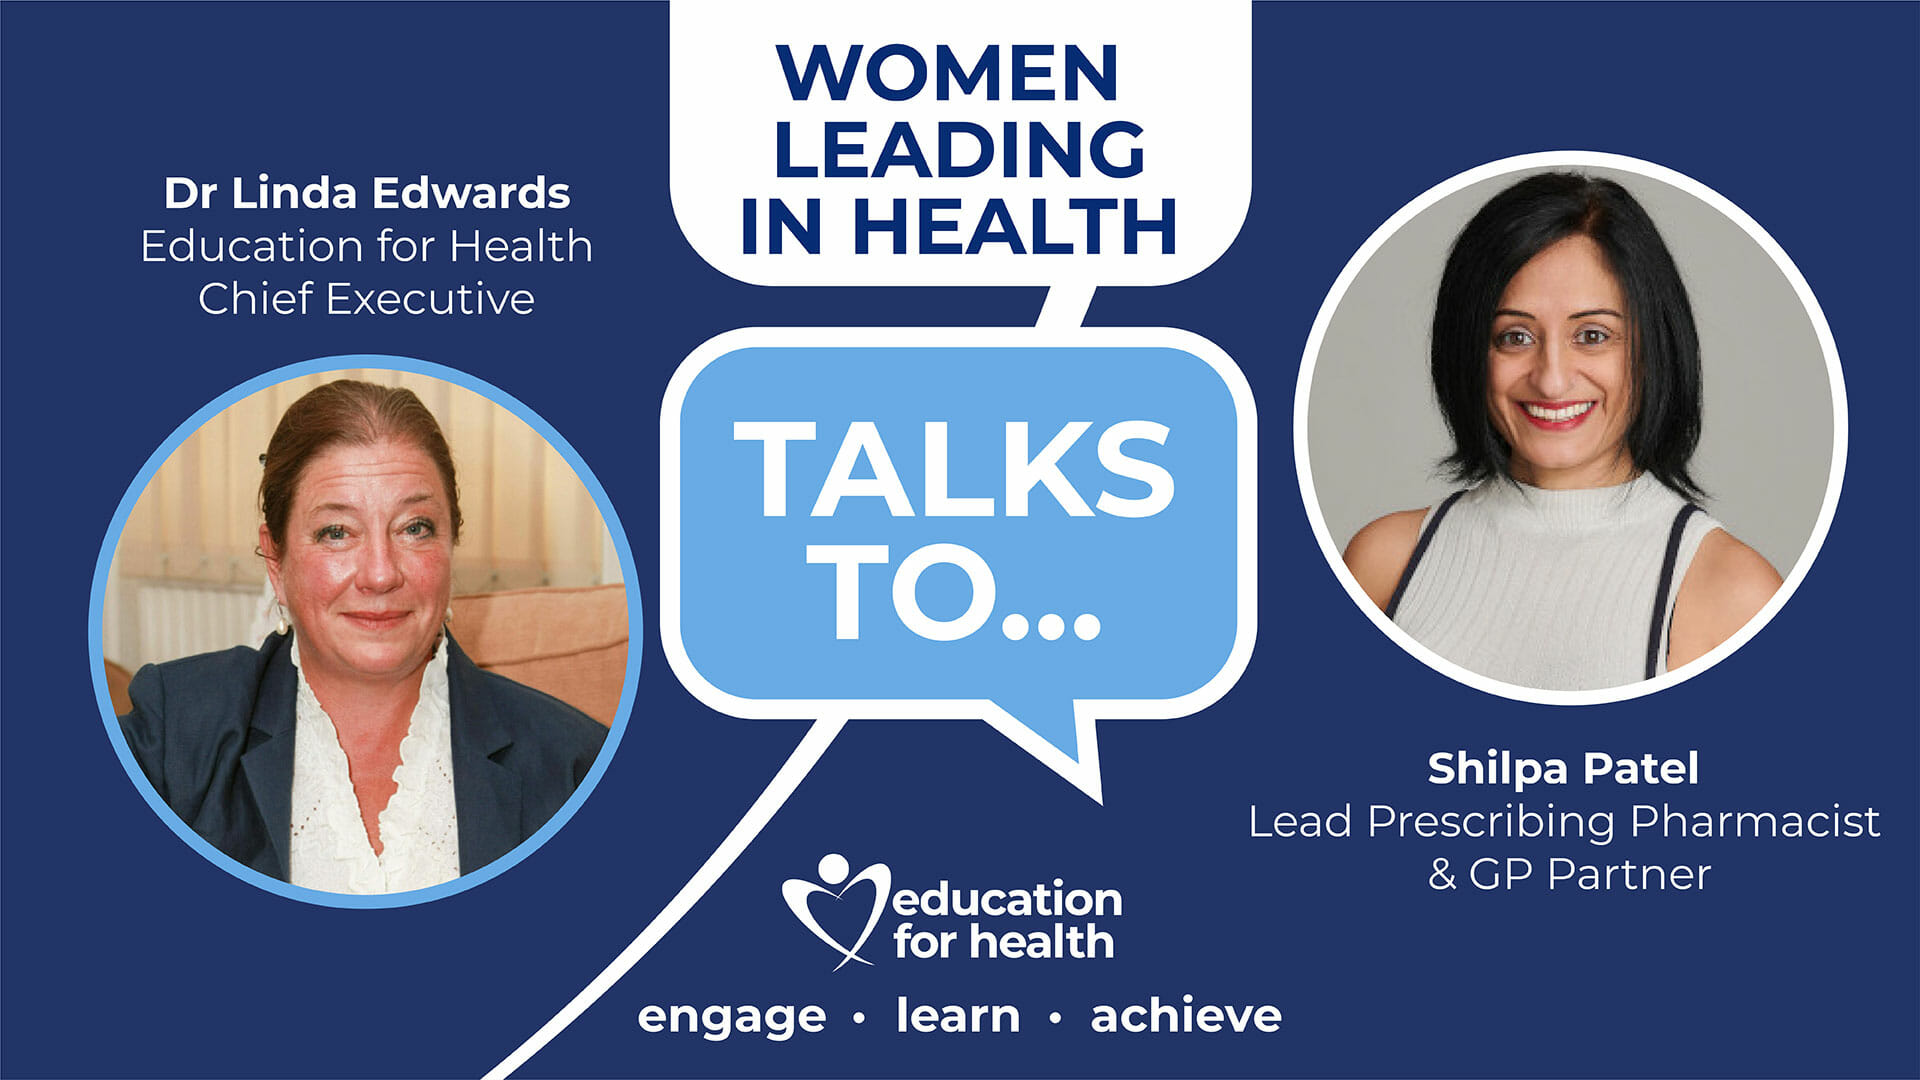 Women leading in health 
The Pharmacist - Shilpa Patel Lead Prescribing Pharmacist & GP Partner